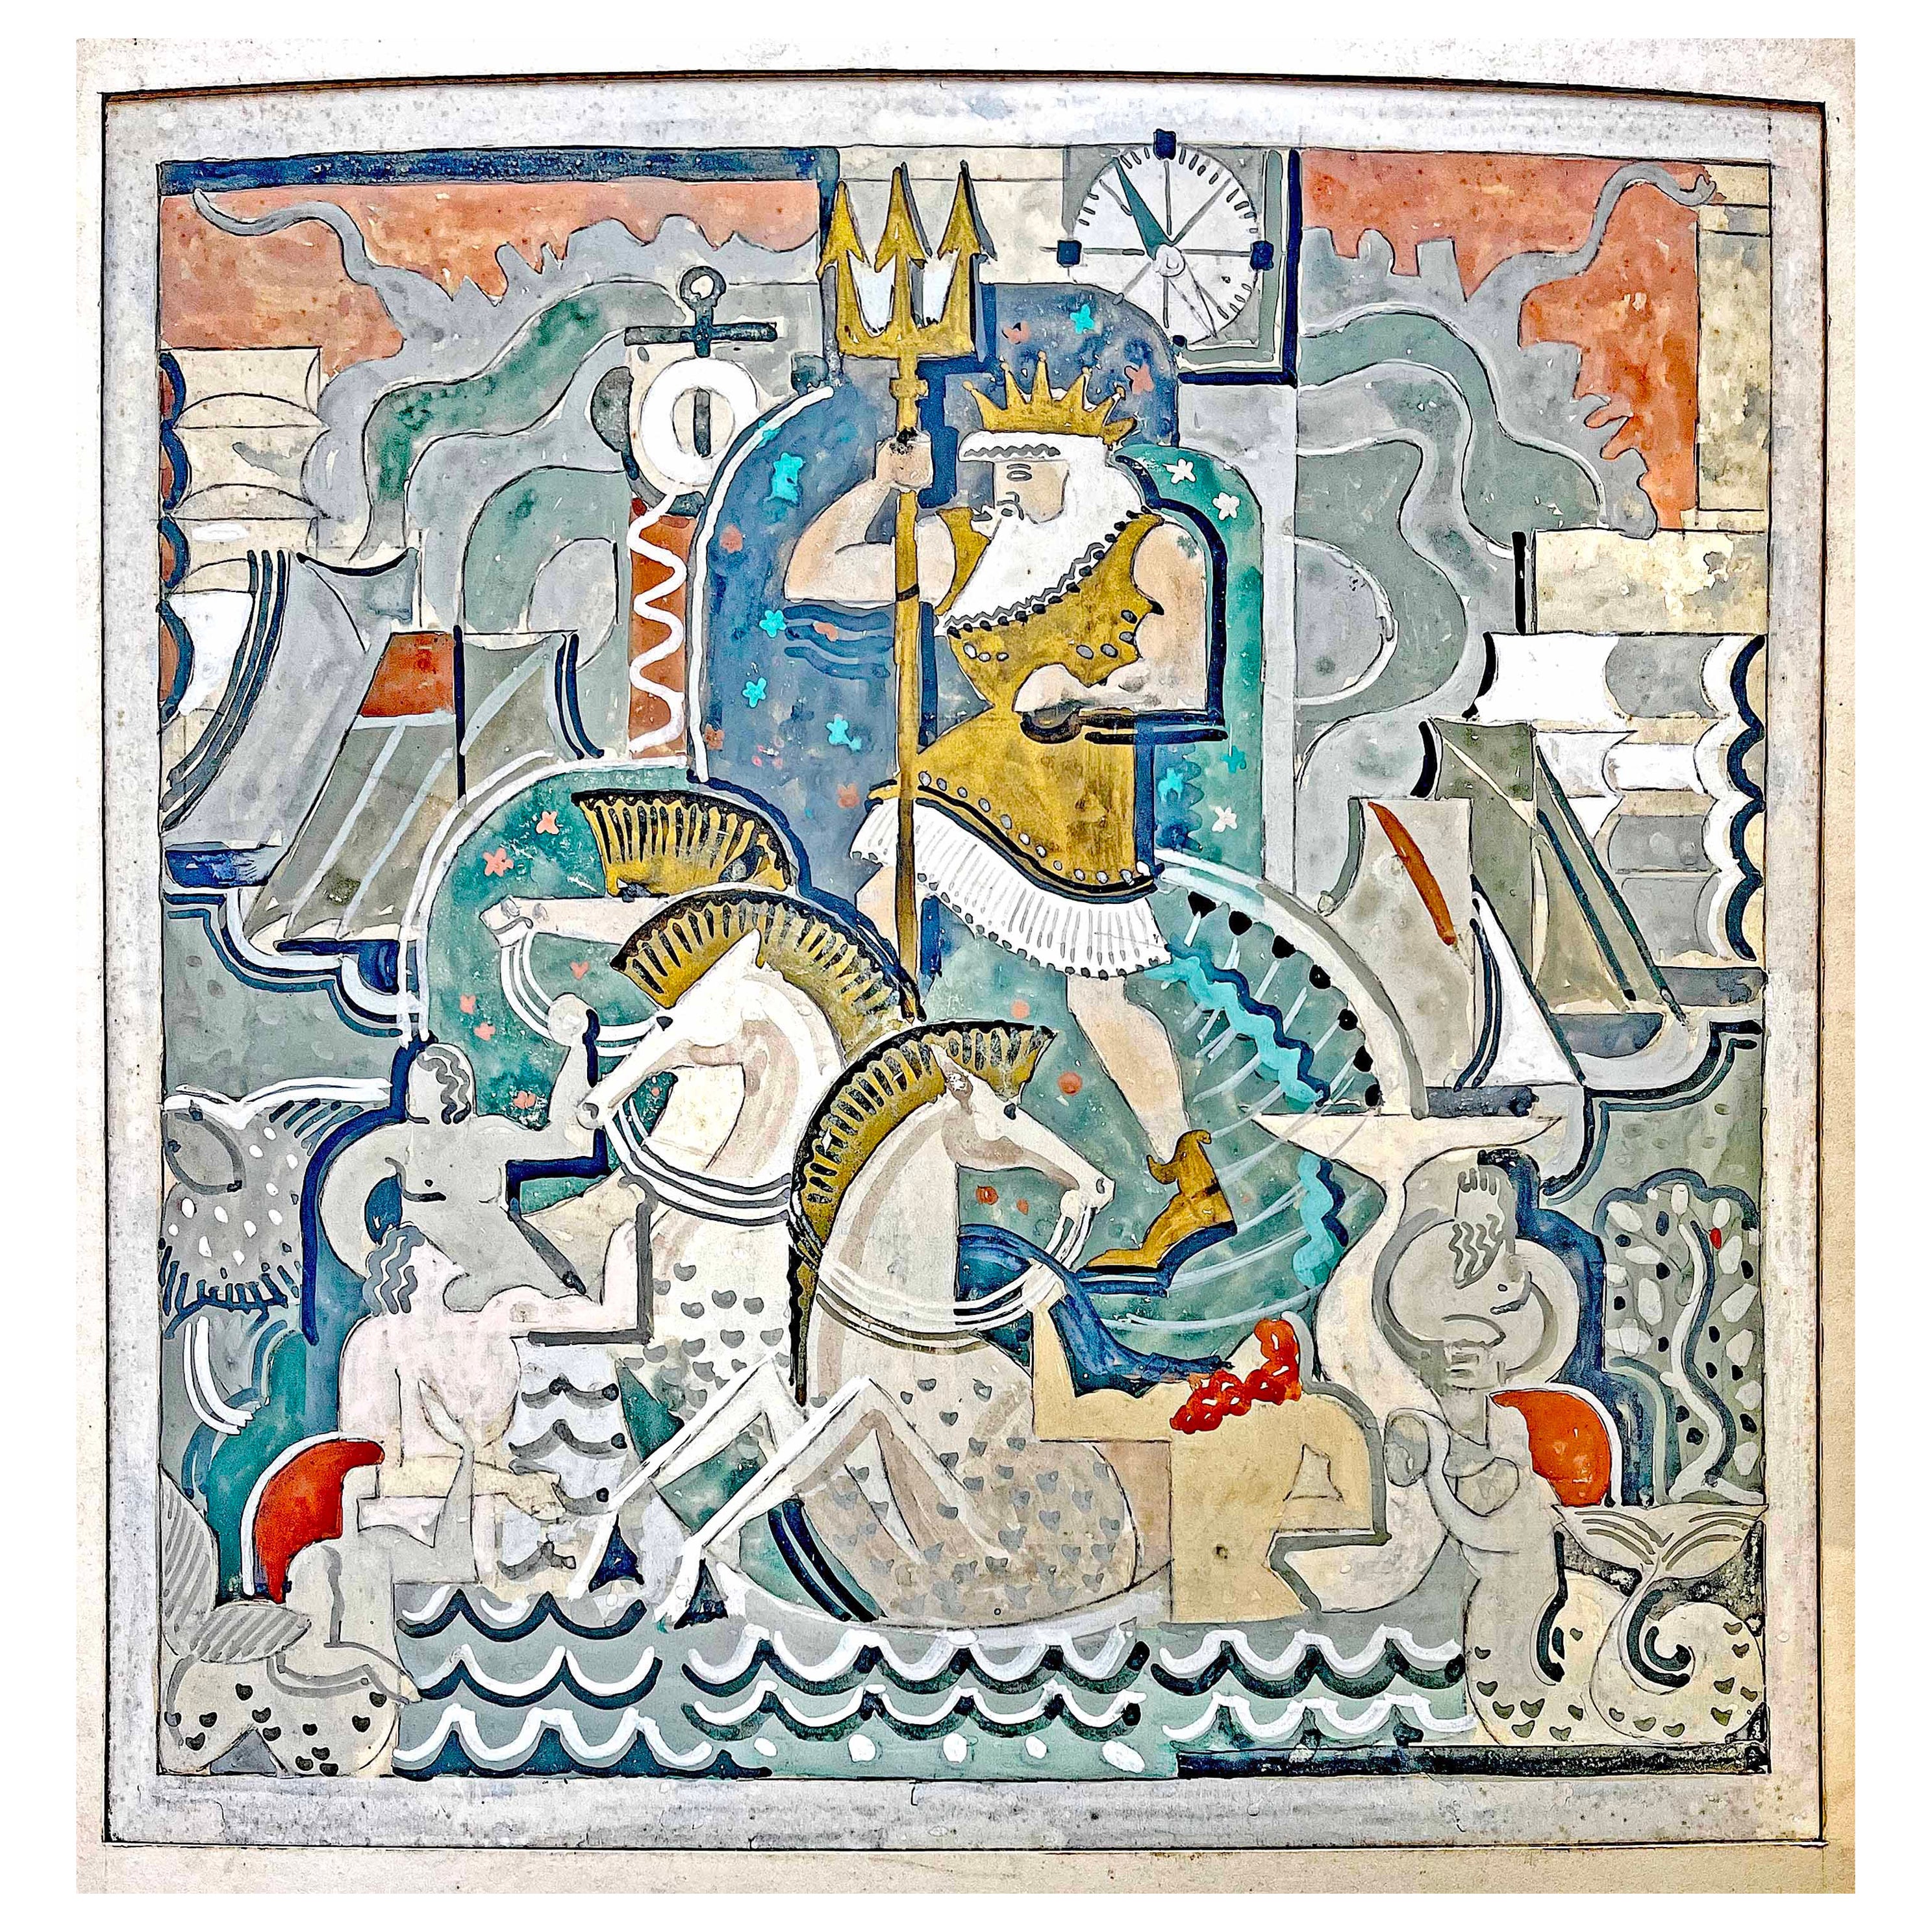 "Neptune's Kingdom", Elaborate Art Deco Painting with Mermaids, Hippocampi